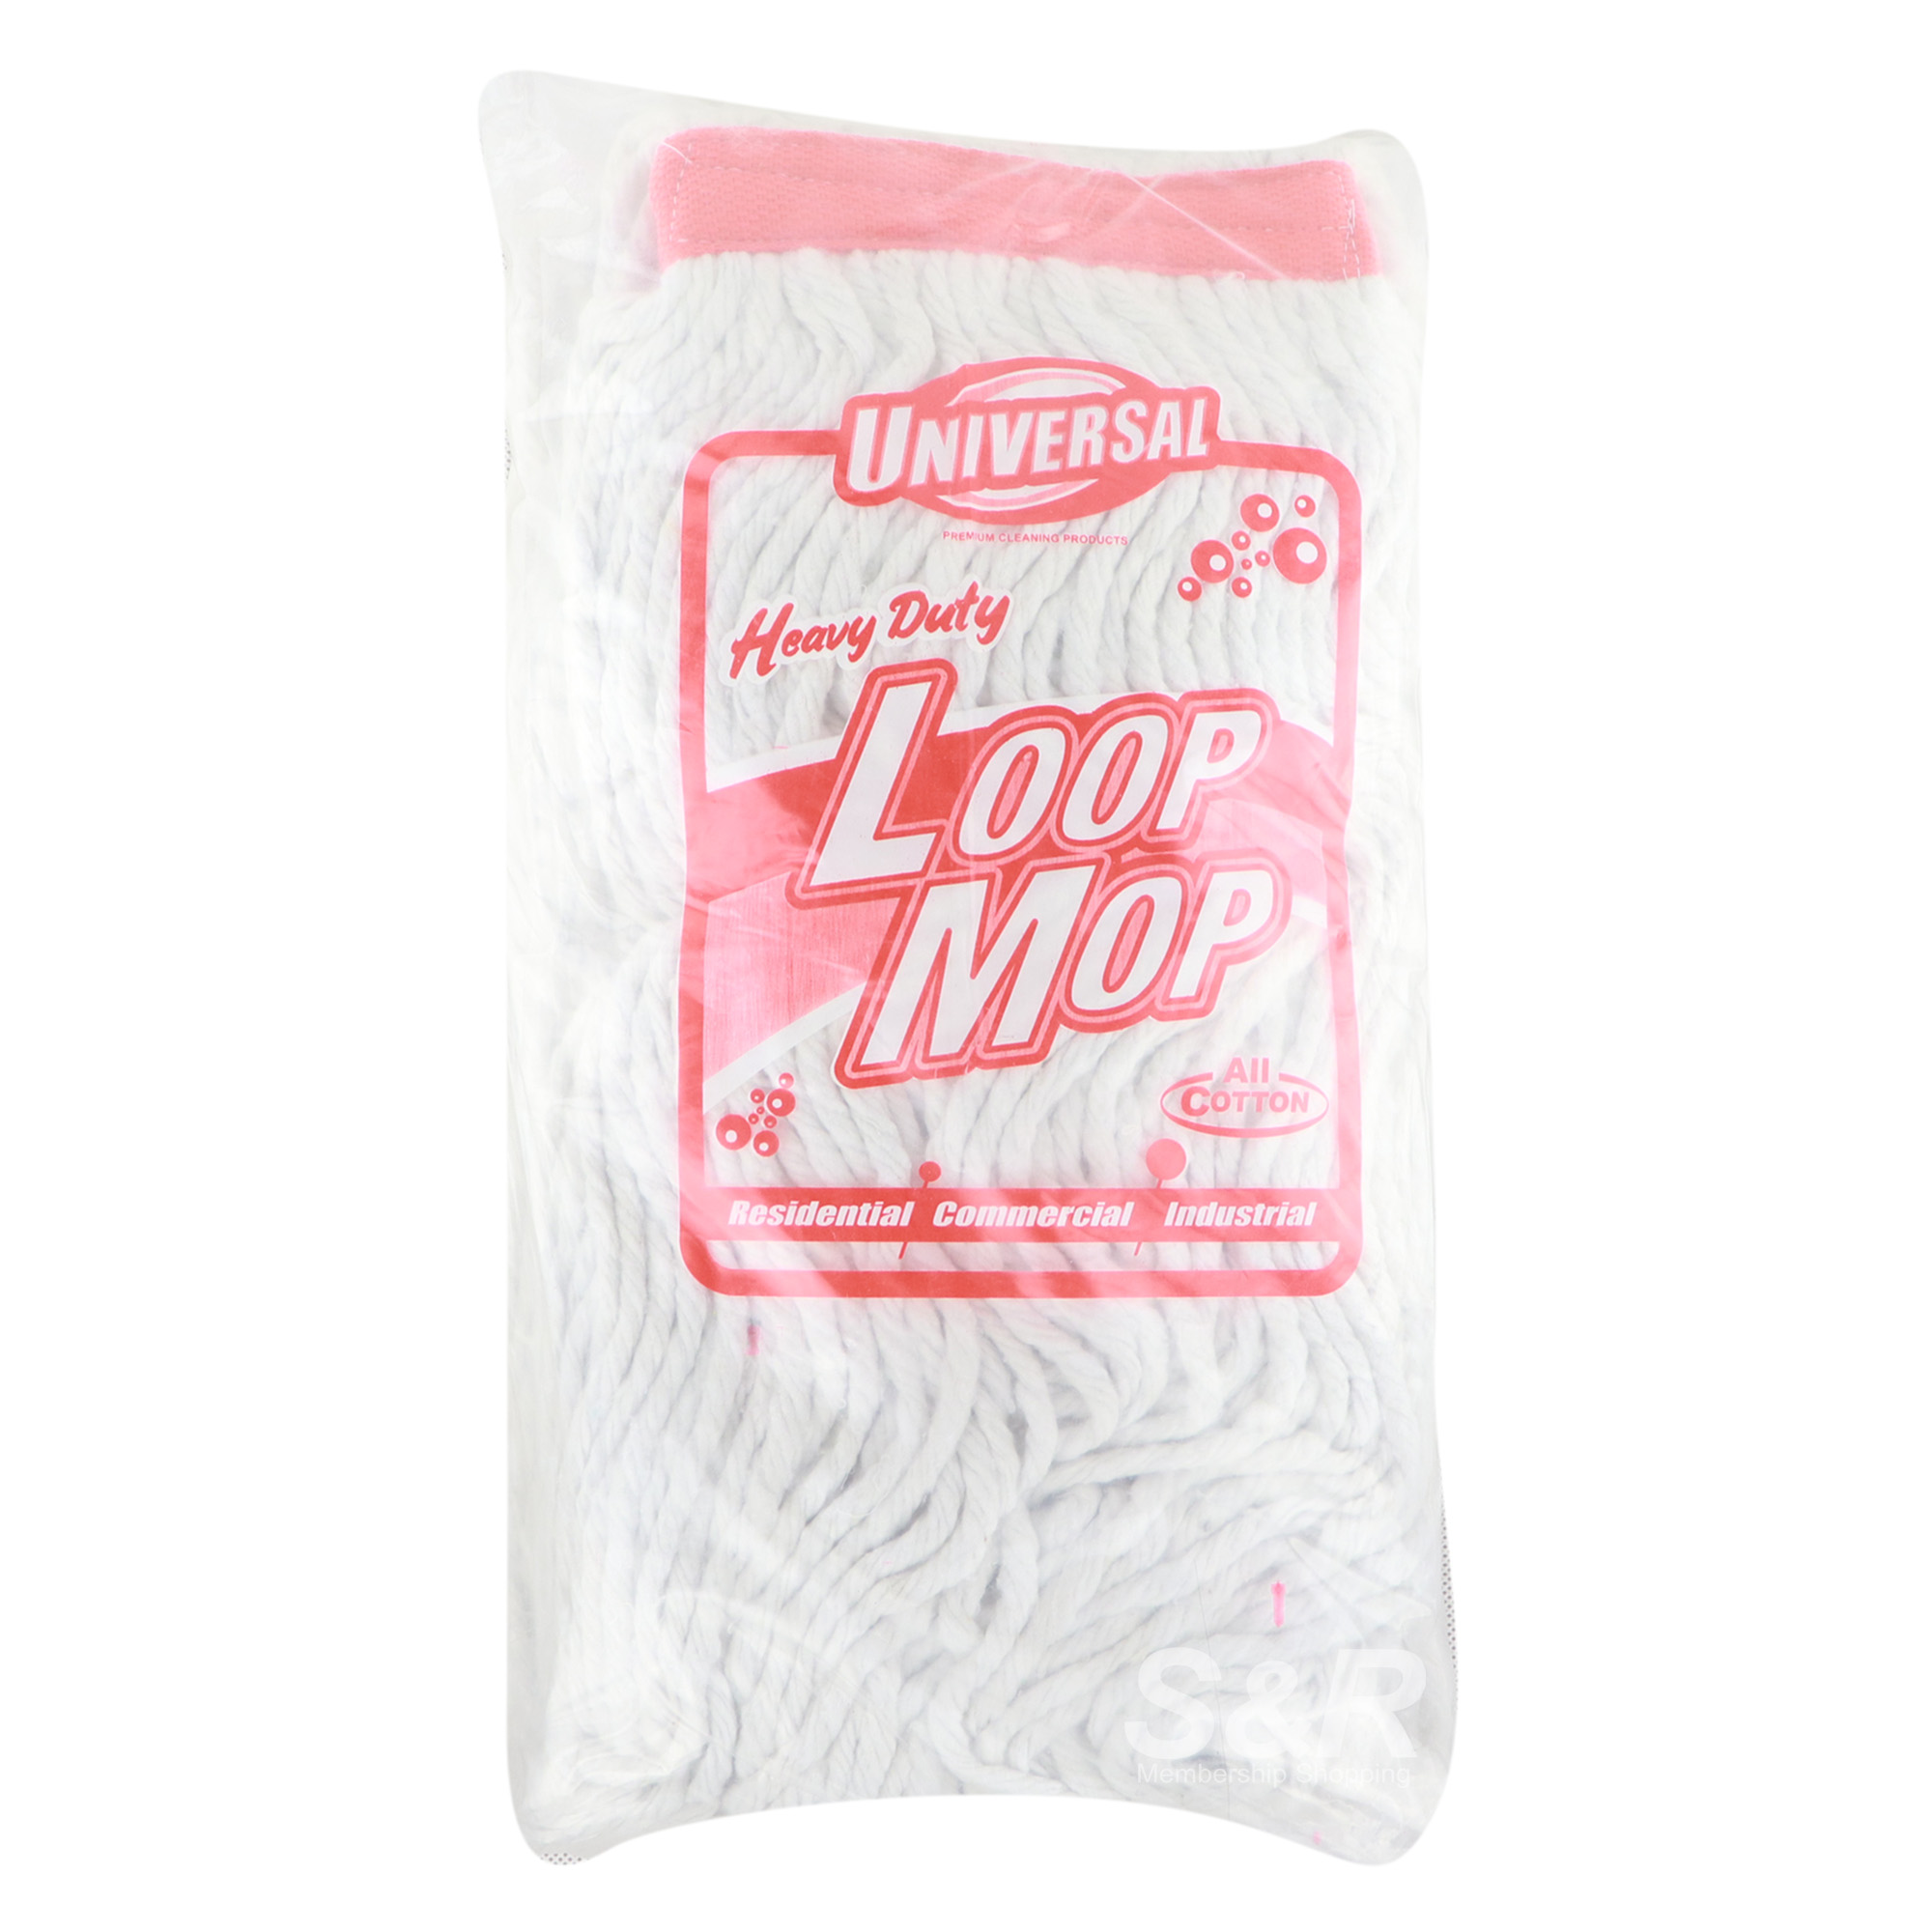 Universal Loop Mop Heavy Duty All Cotton 2pcs